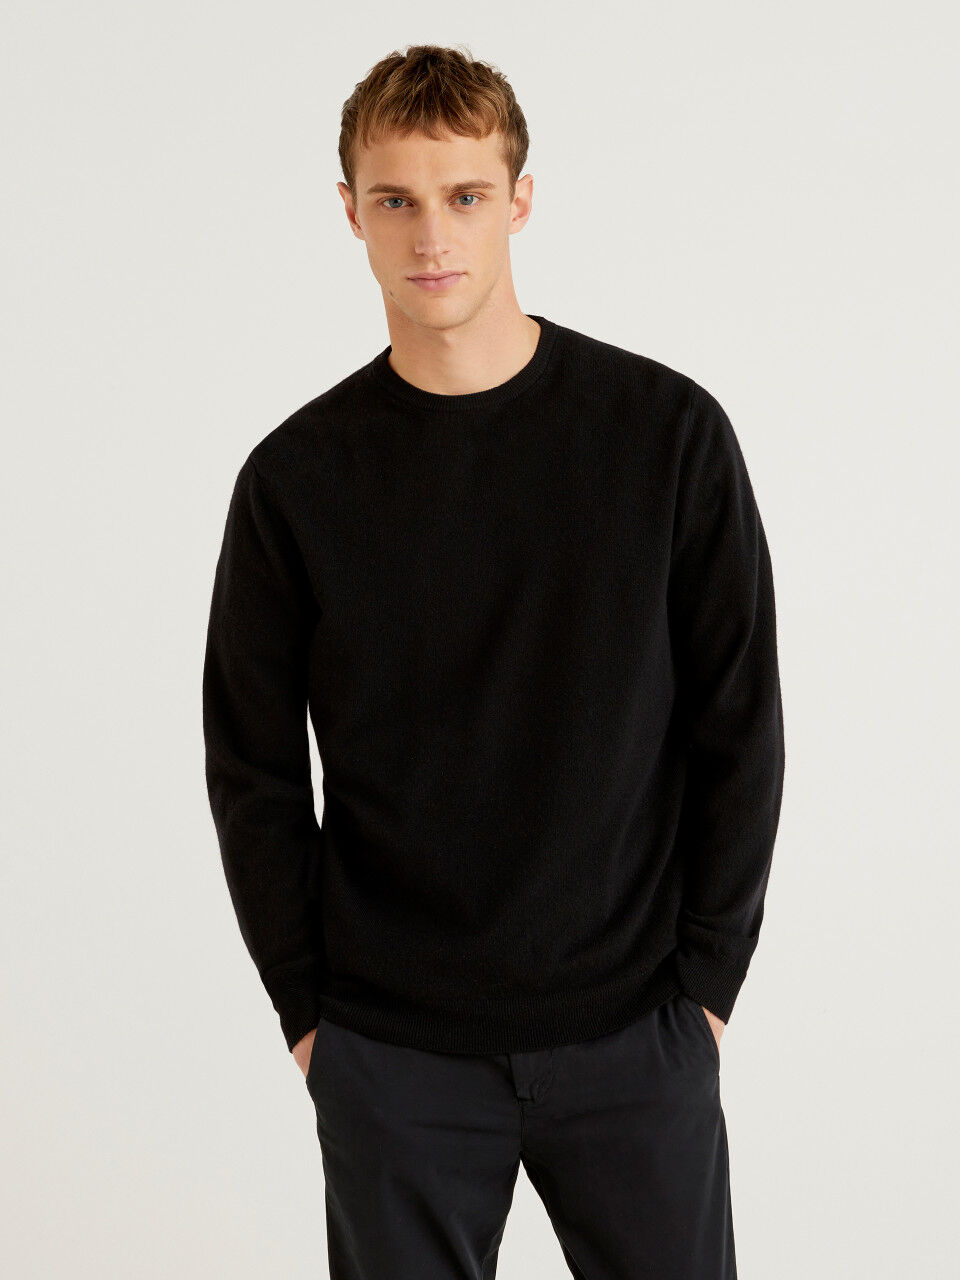 Men's Iconic Merino Wool Knitwear Collection 2023 | Benetton